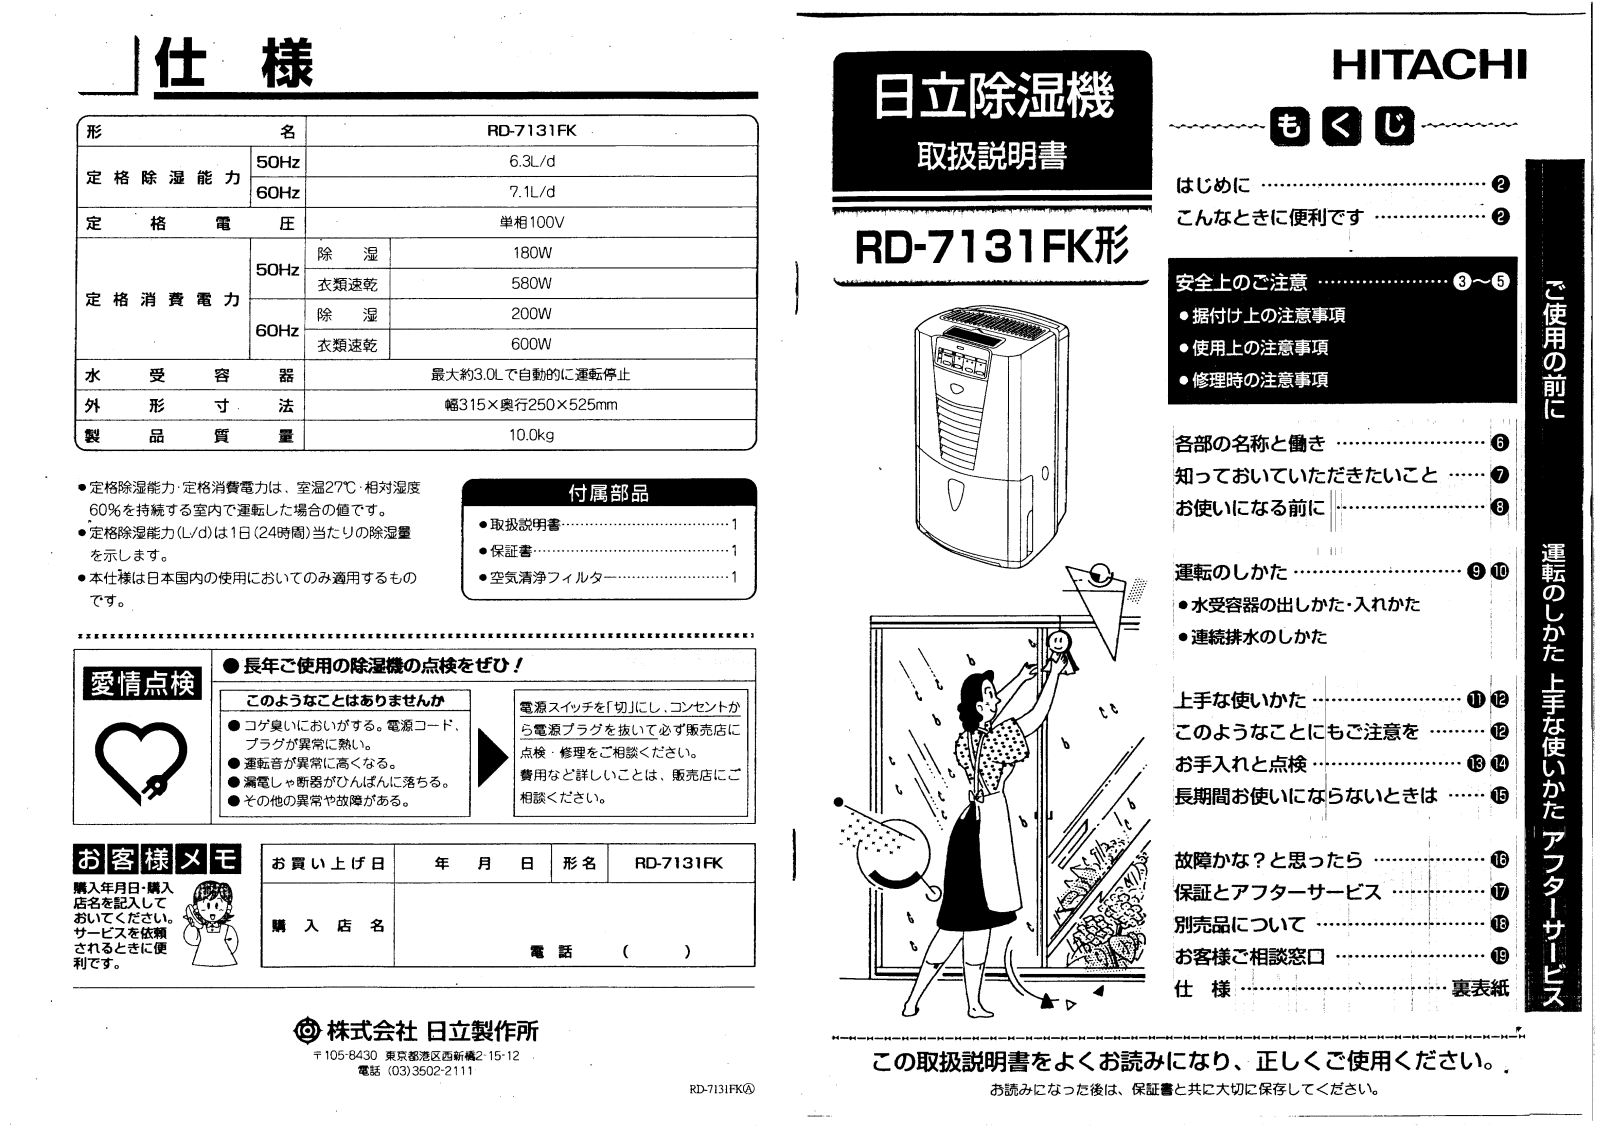 HITACHI RD-7131FK User guide